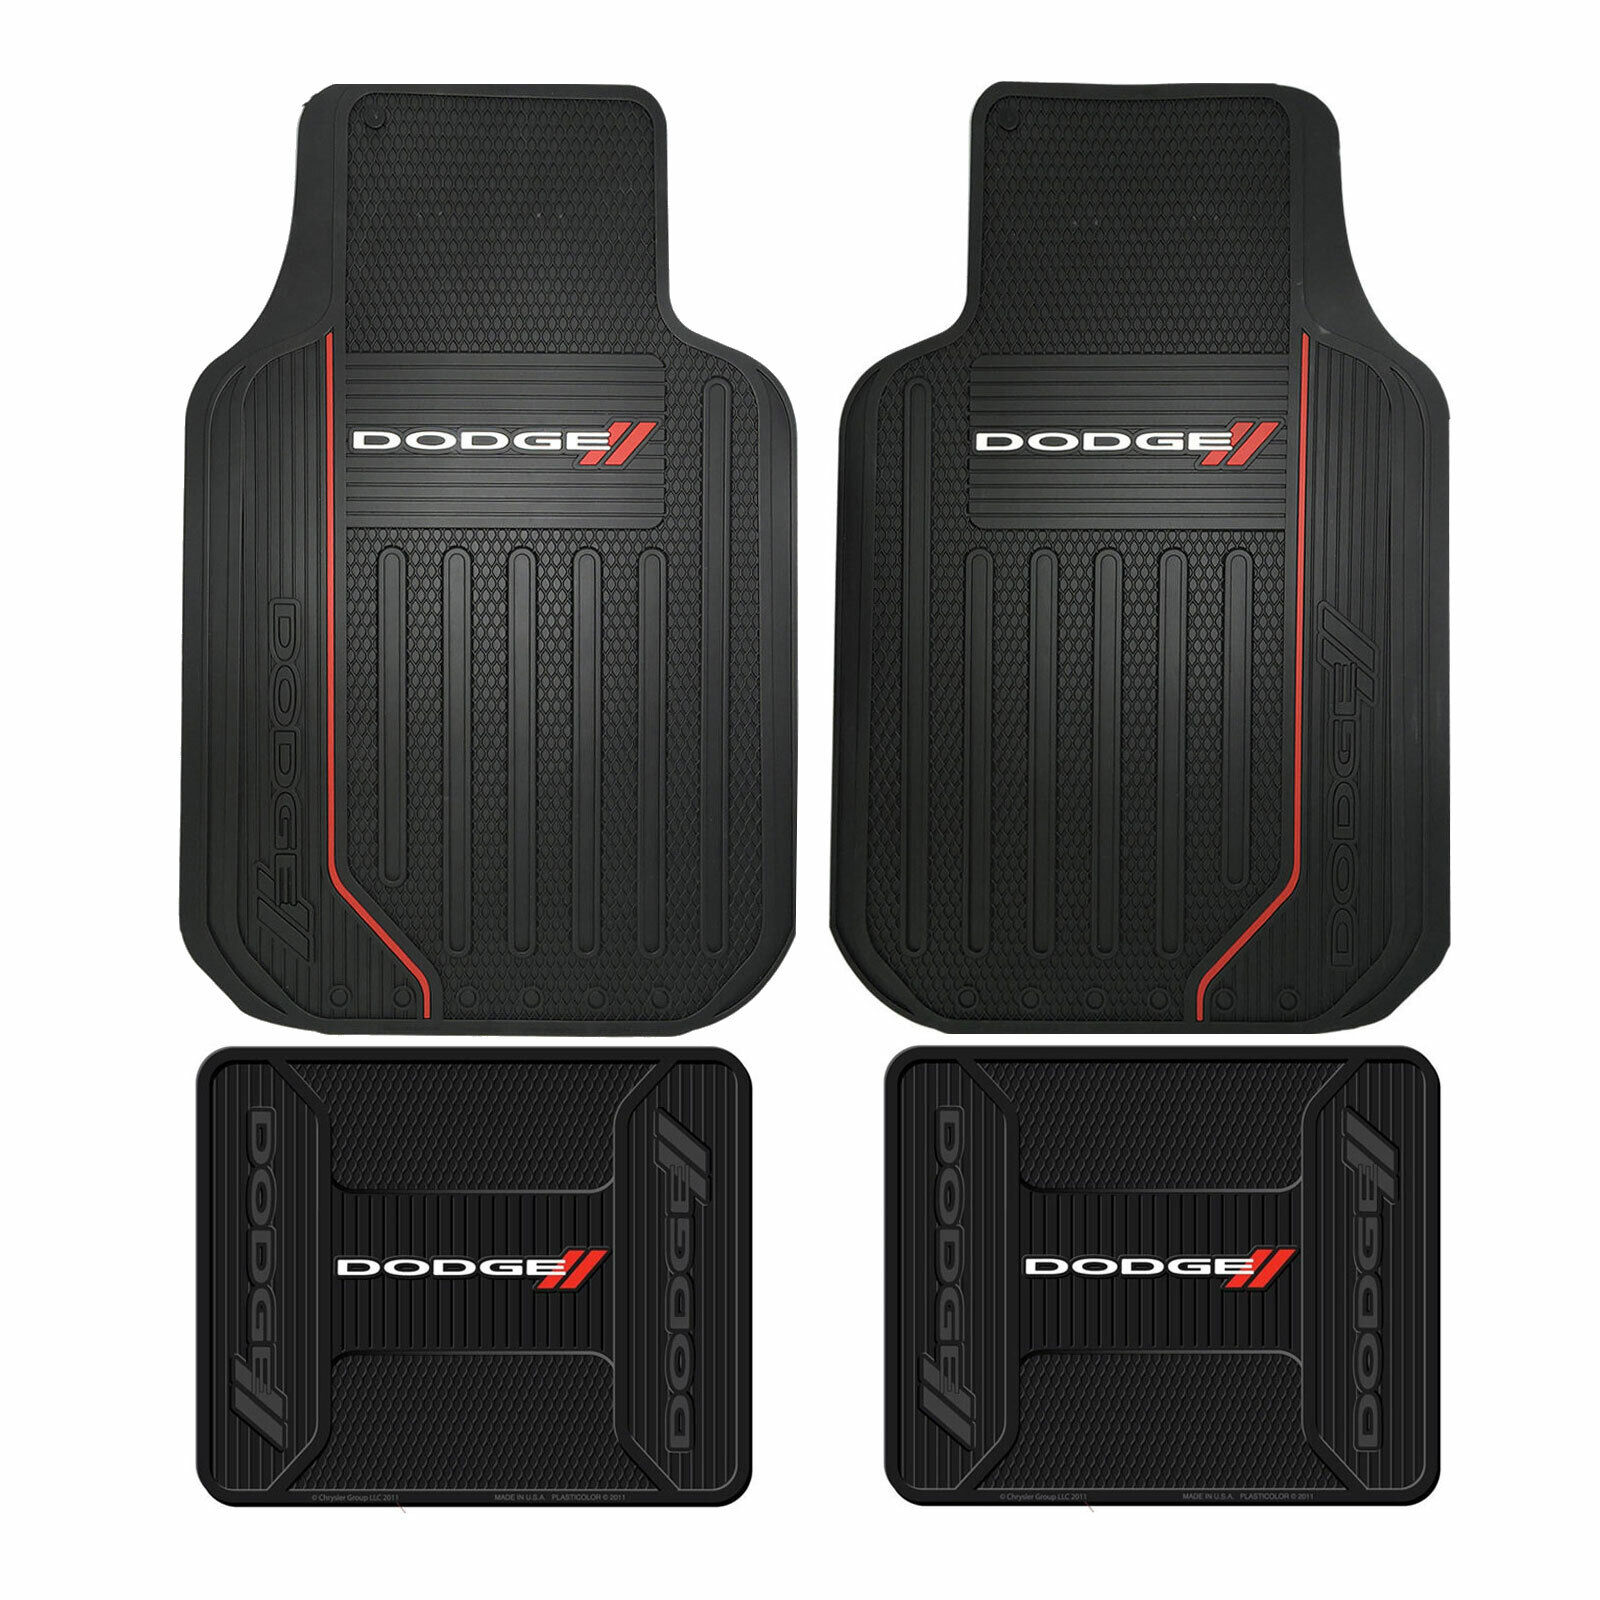 Dodge Elite Car Truck Seat Covers / Floor Mats / Keychain / Steering Wheel Cover